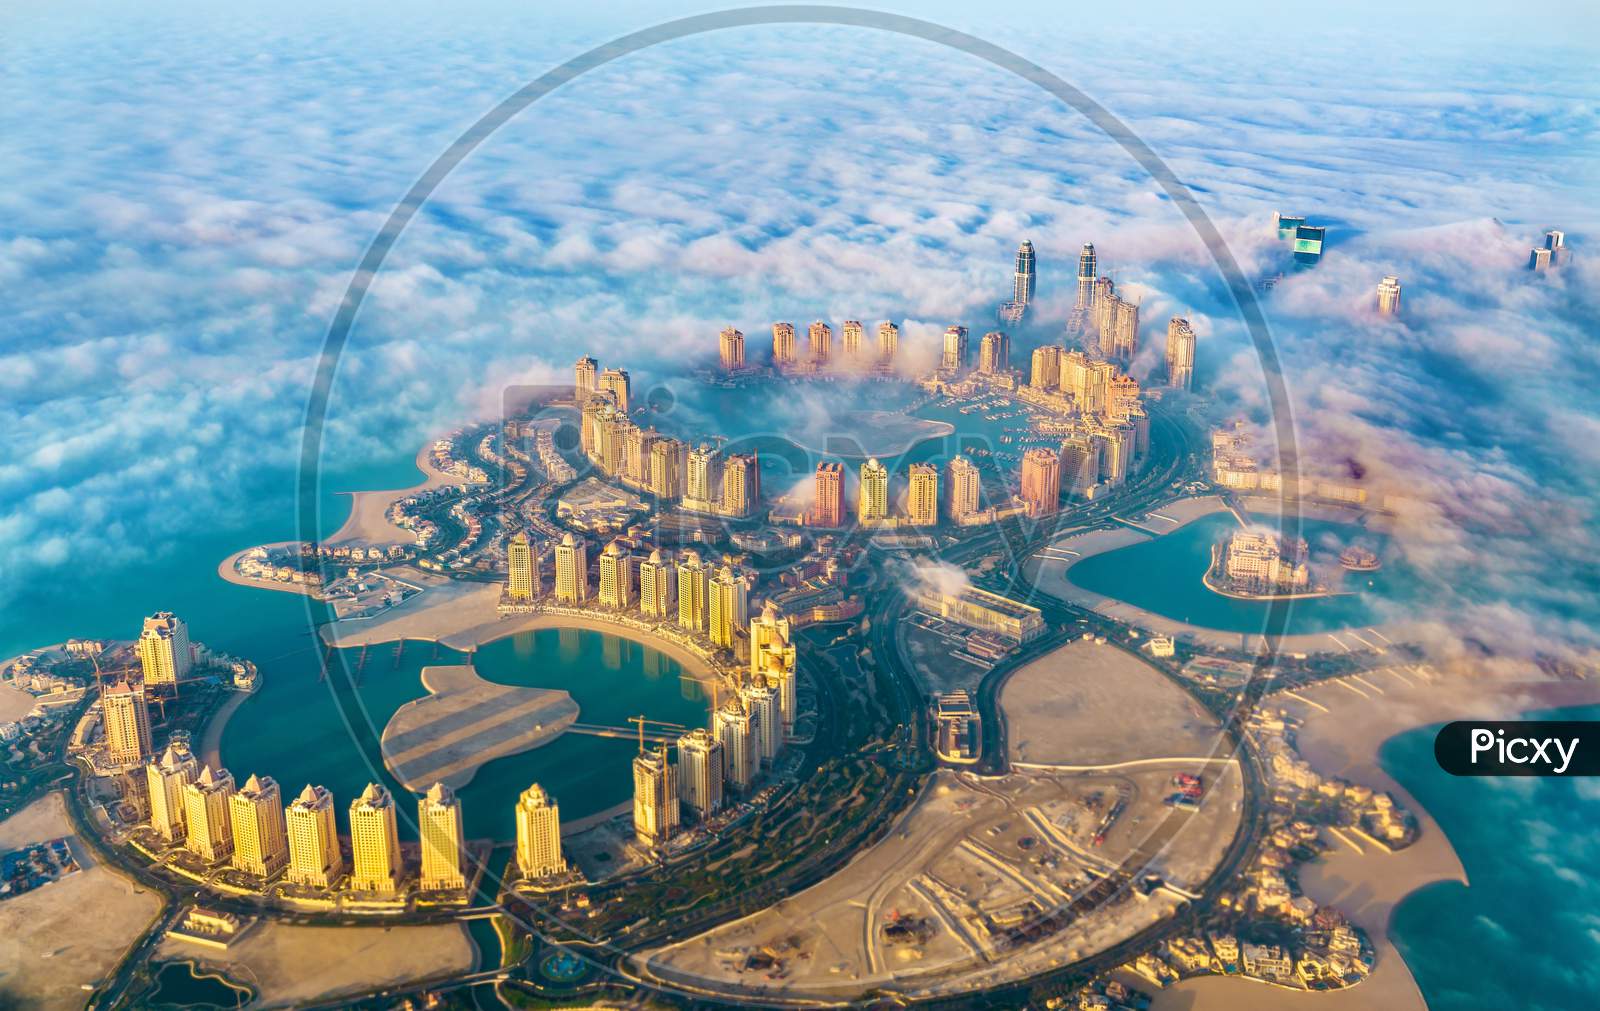 Aerial View Of The Pearl-Qatar Island In Doha Through The Morning Fog - Qatar, The Persian Gulf